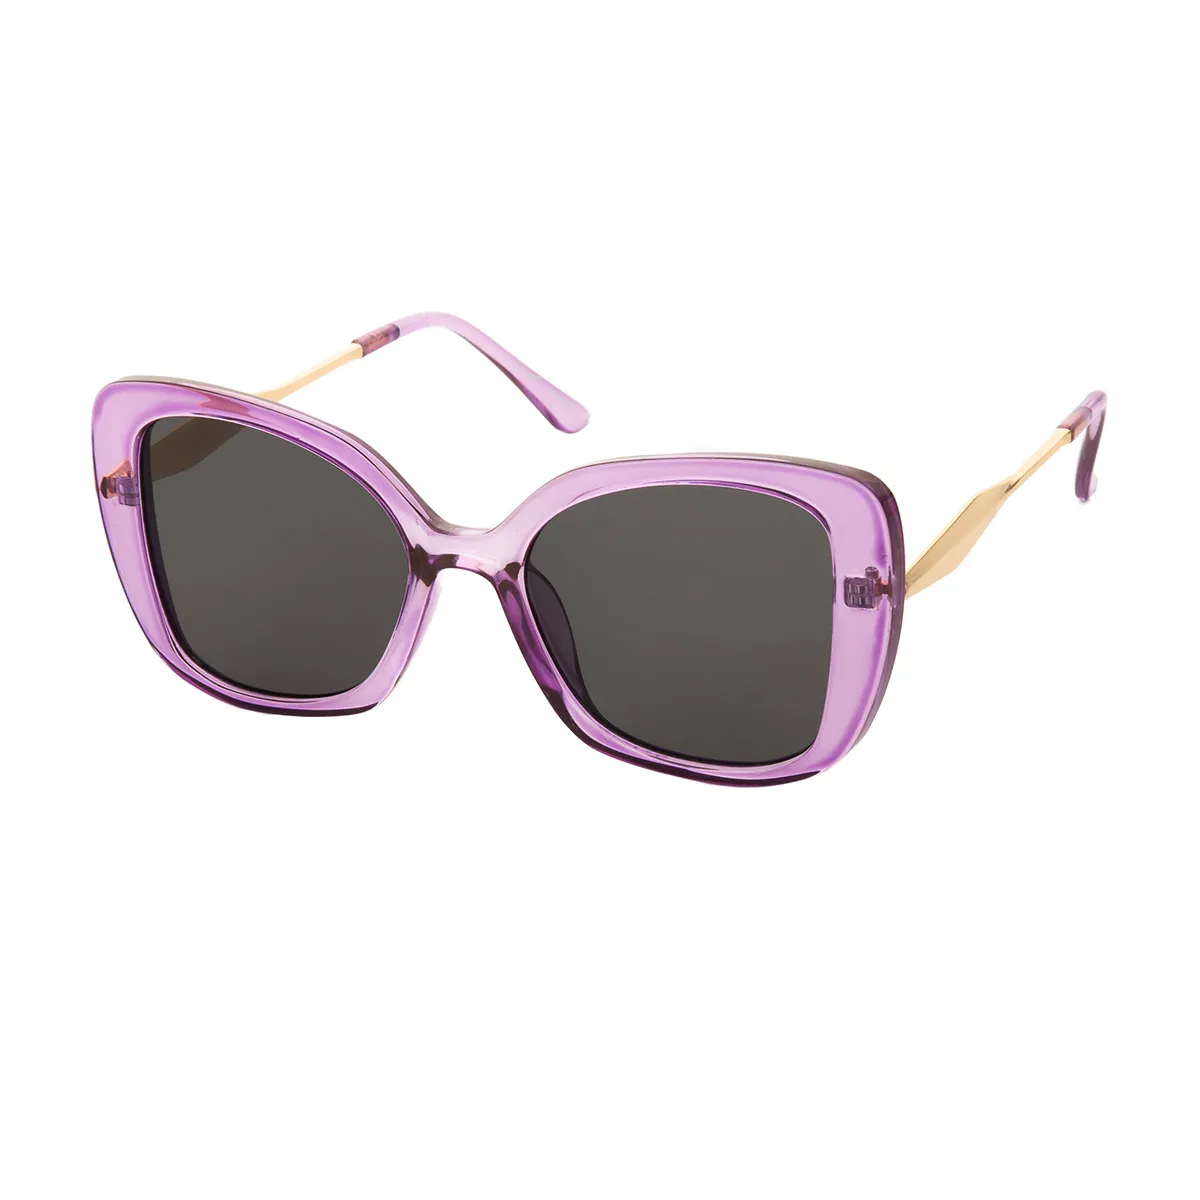 Tony - Square Purple Sunglasses for Women